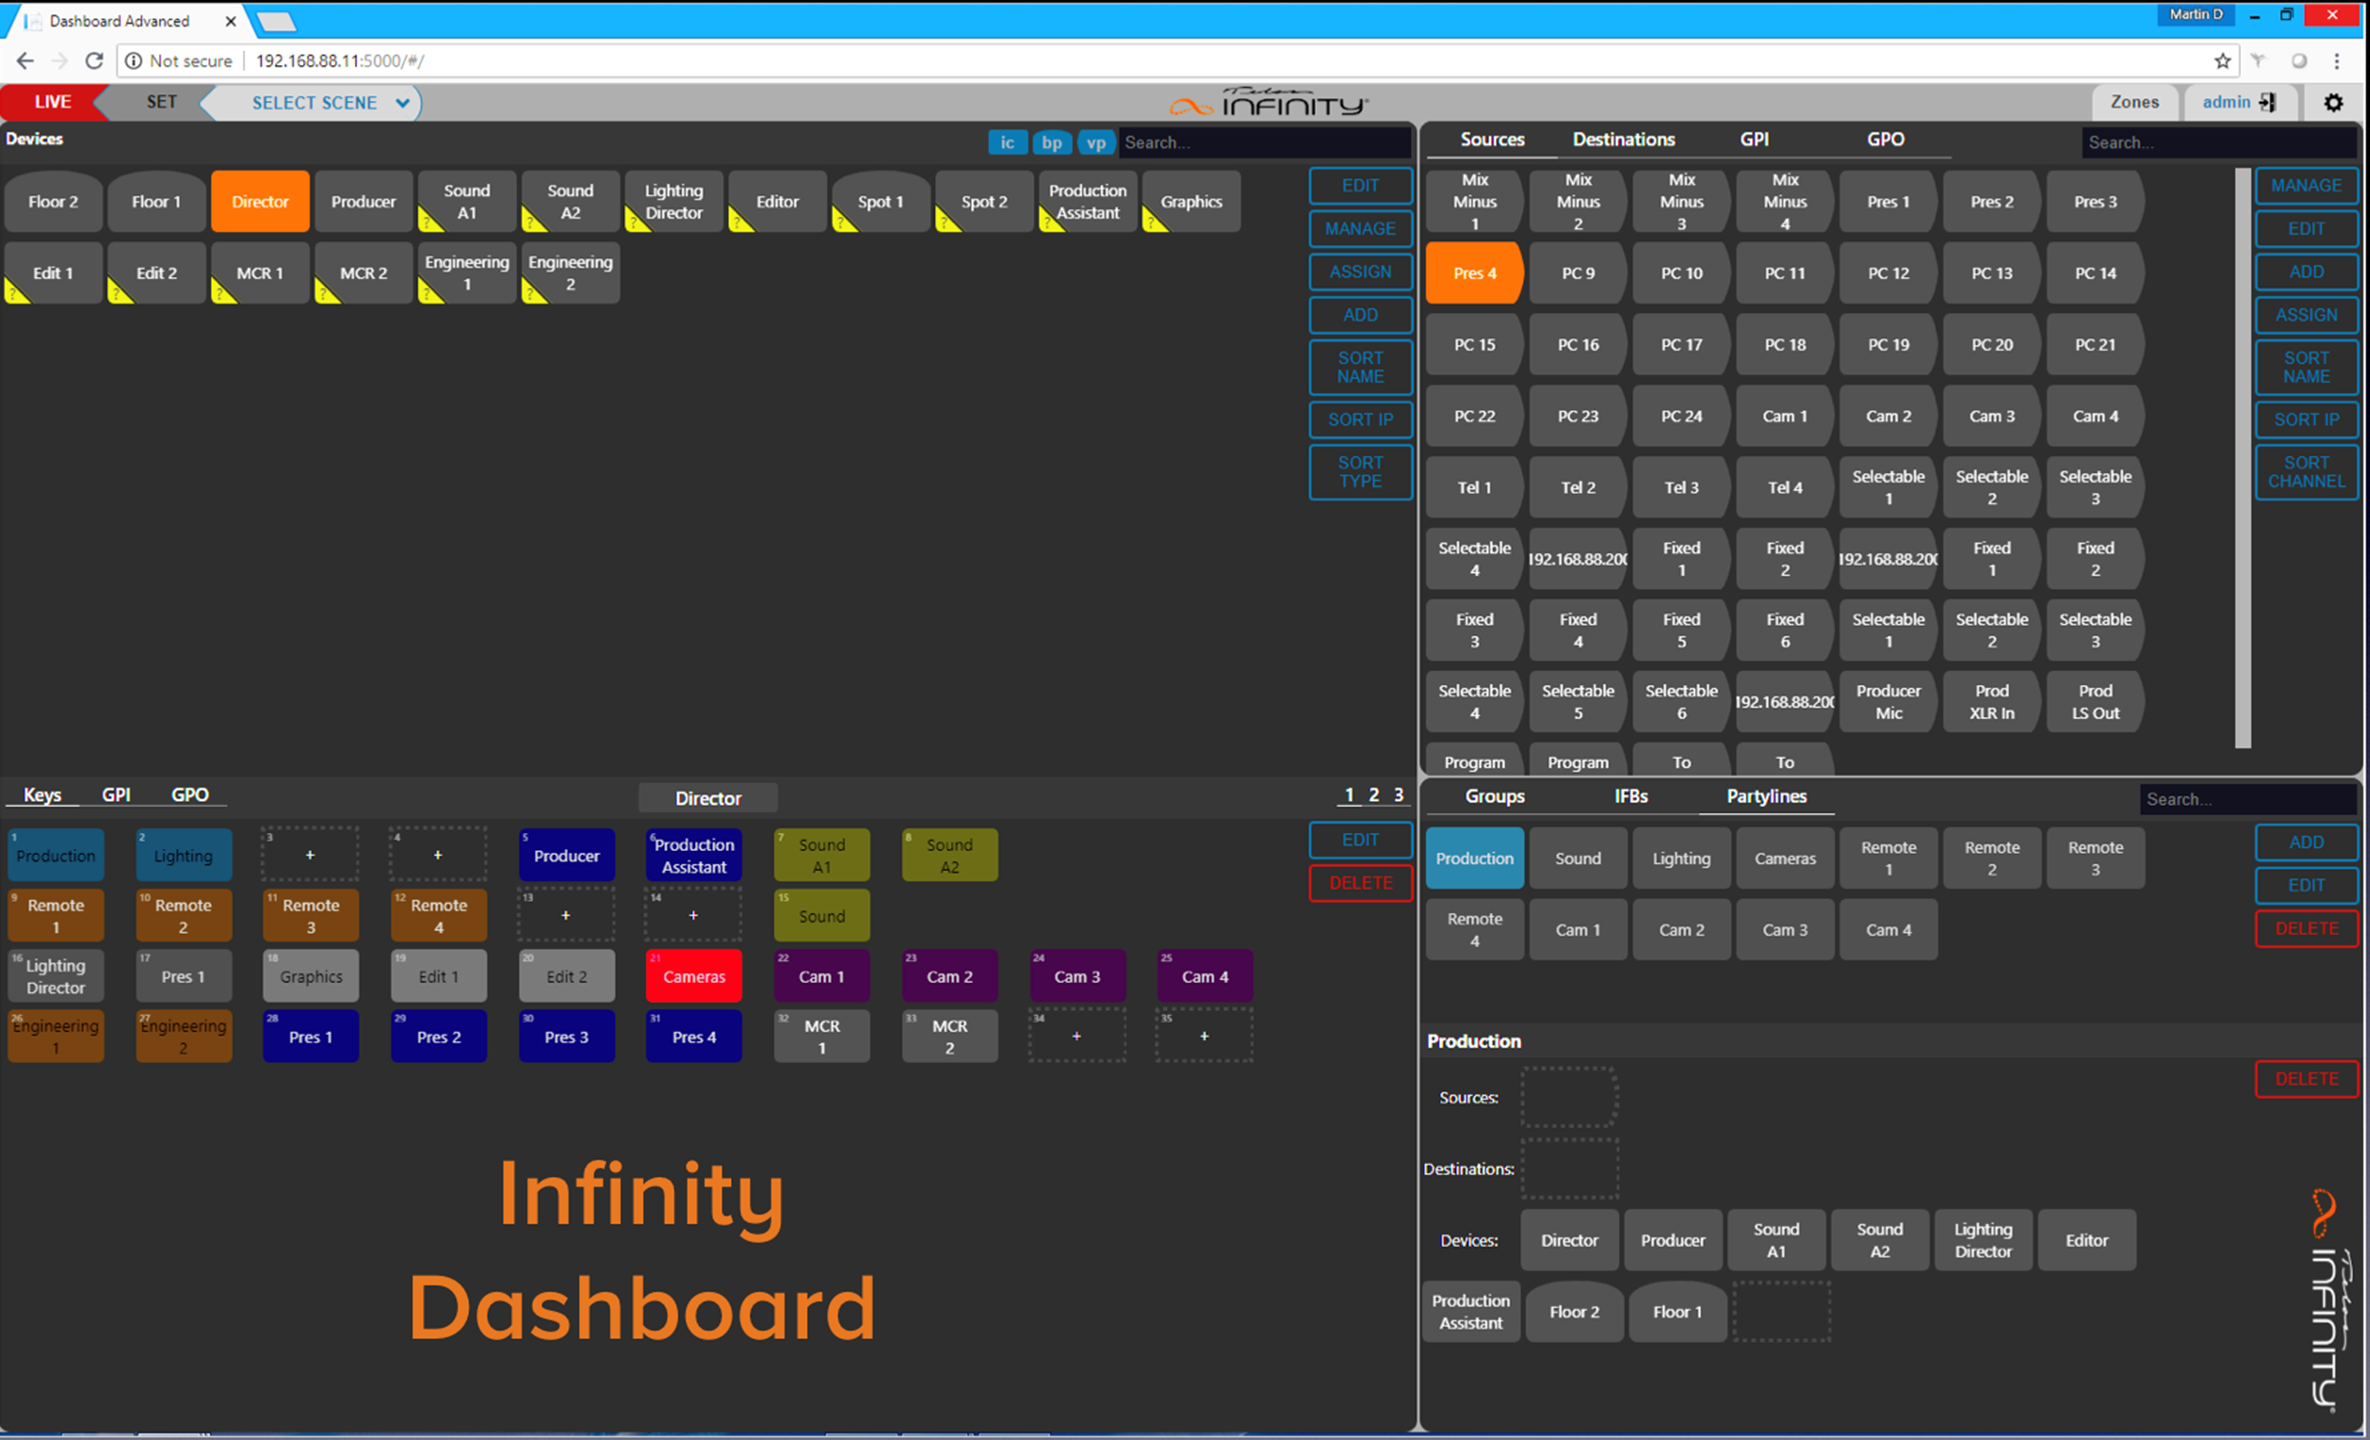 Infinity Dashbordソフト